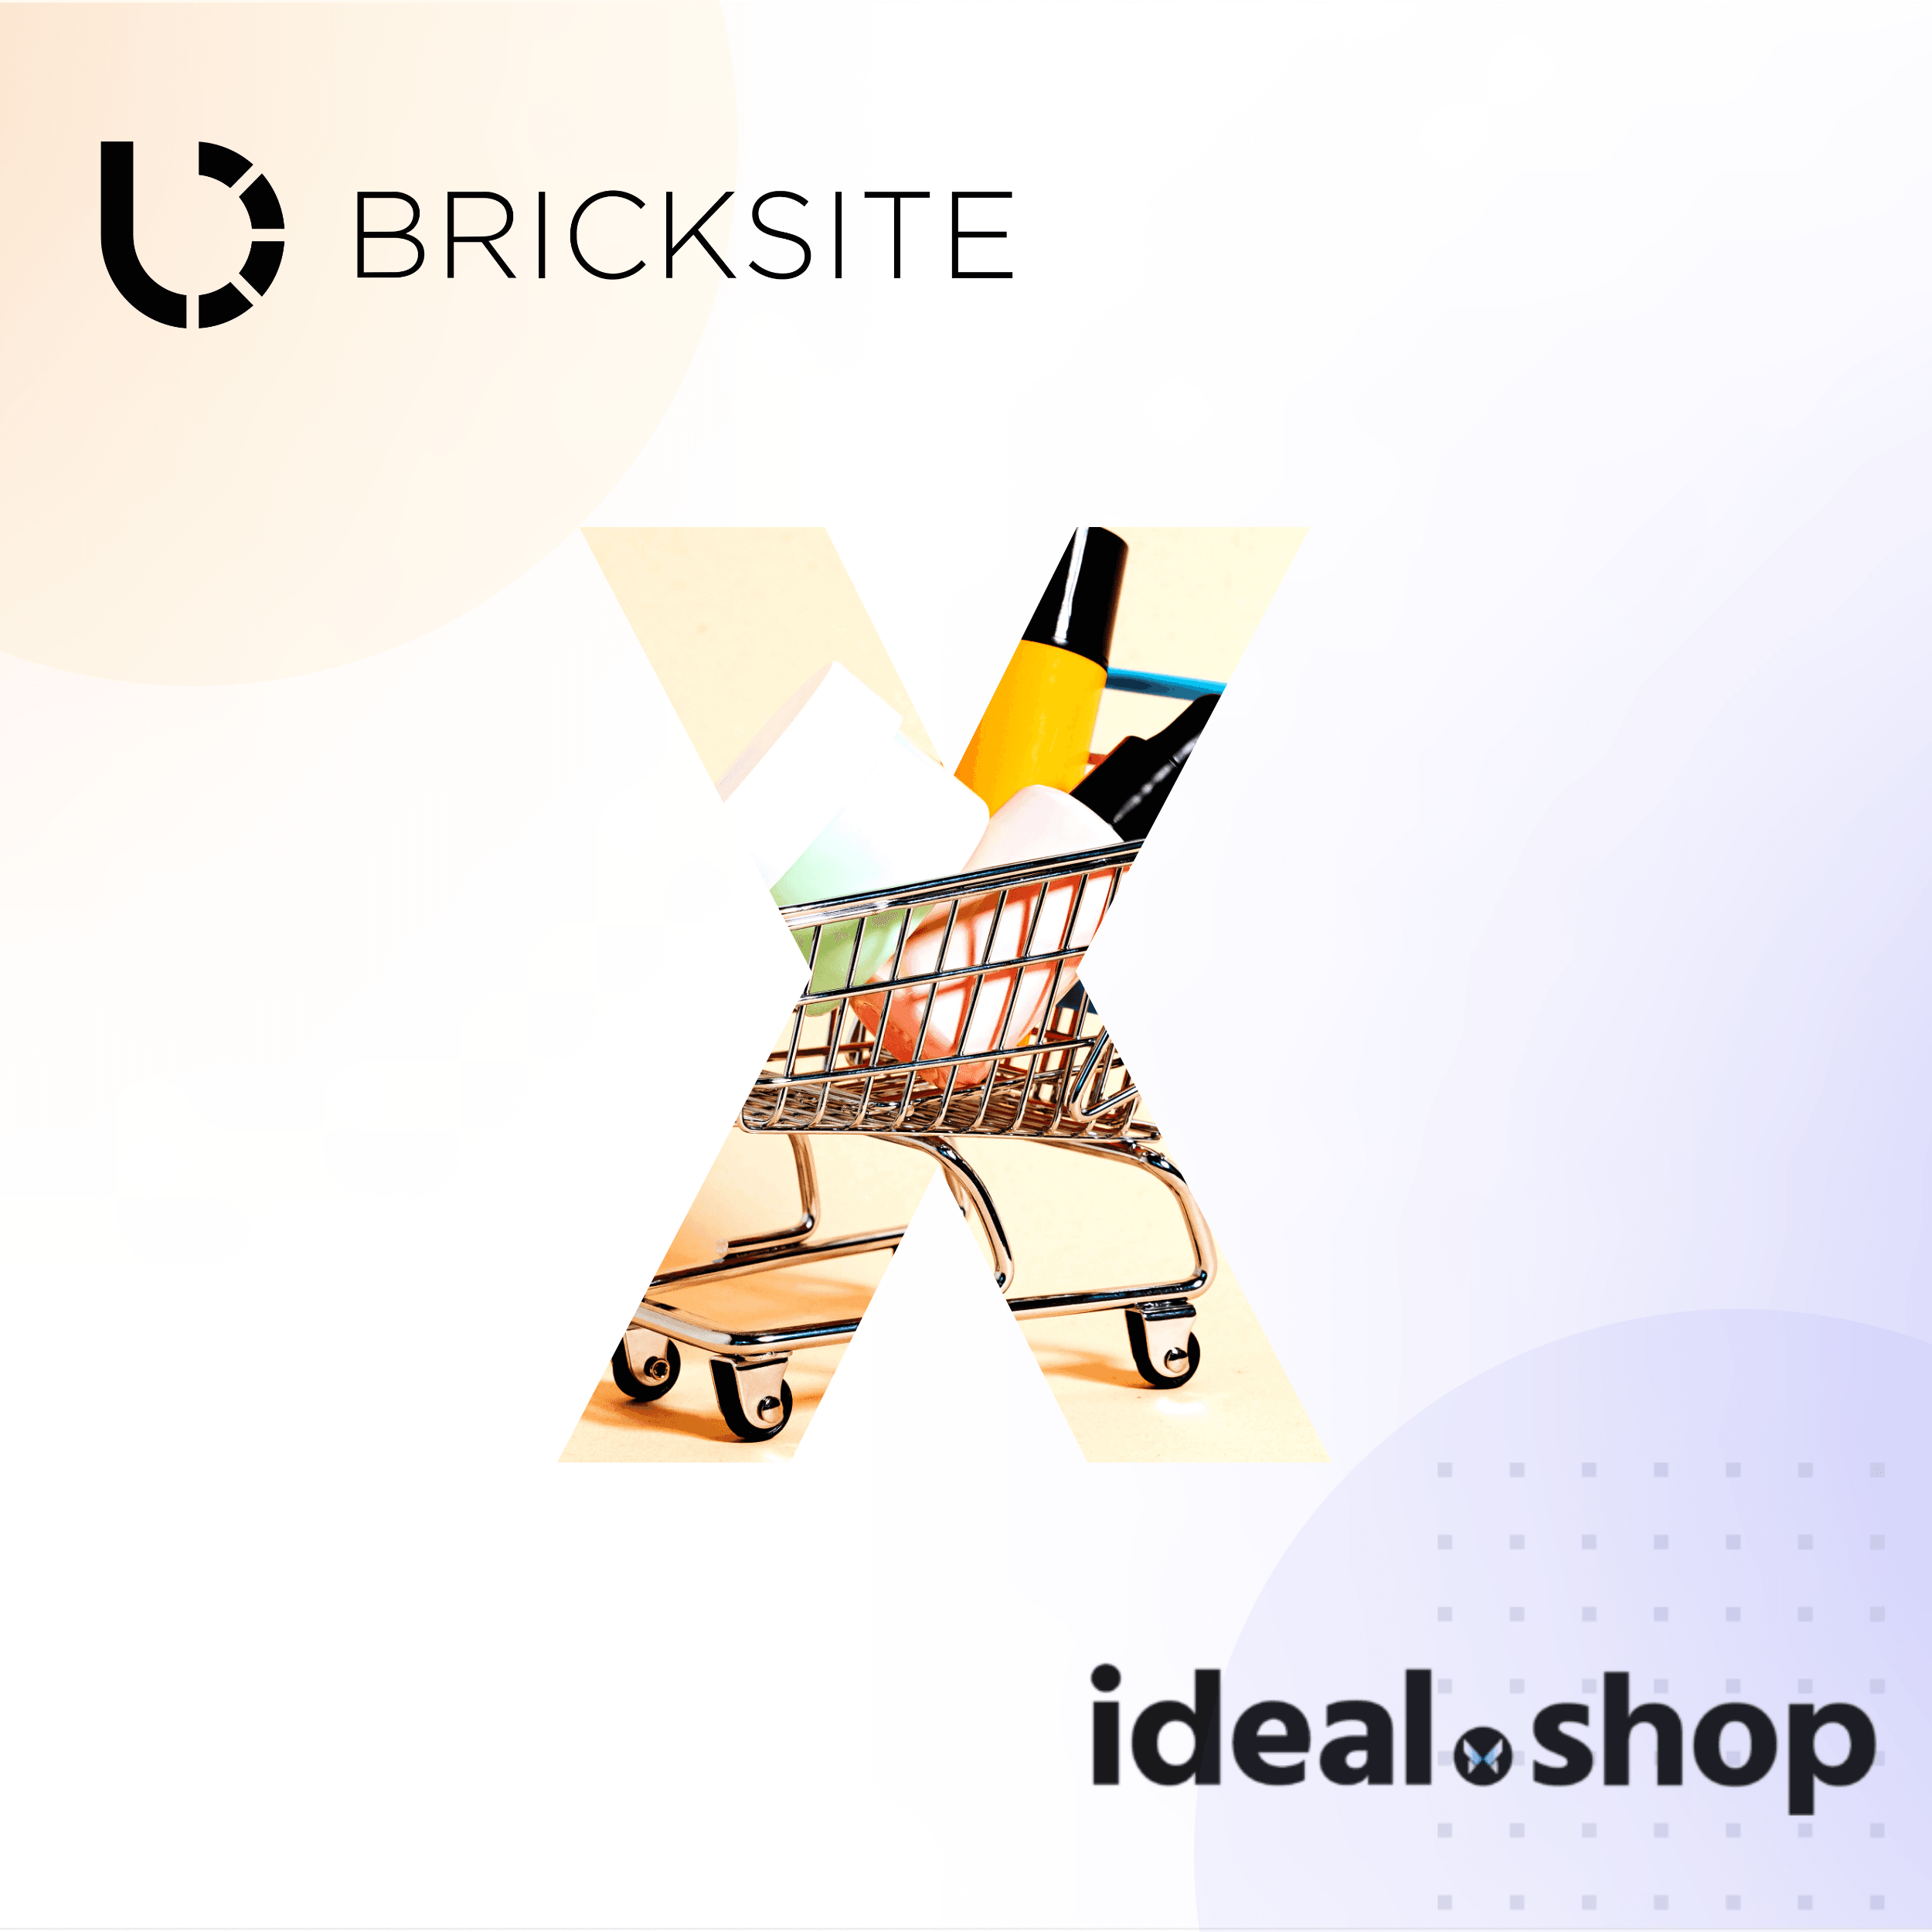 Bricksite x ideal.shop